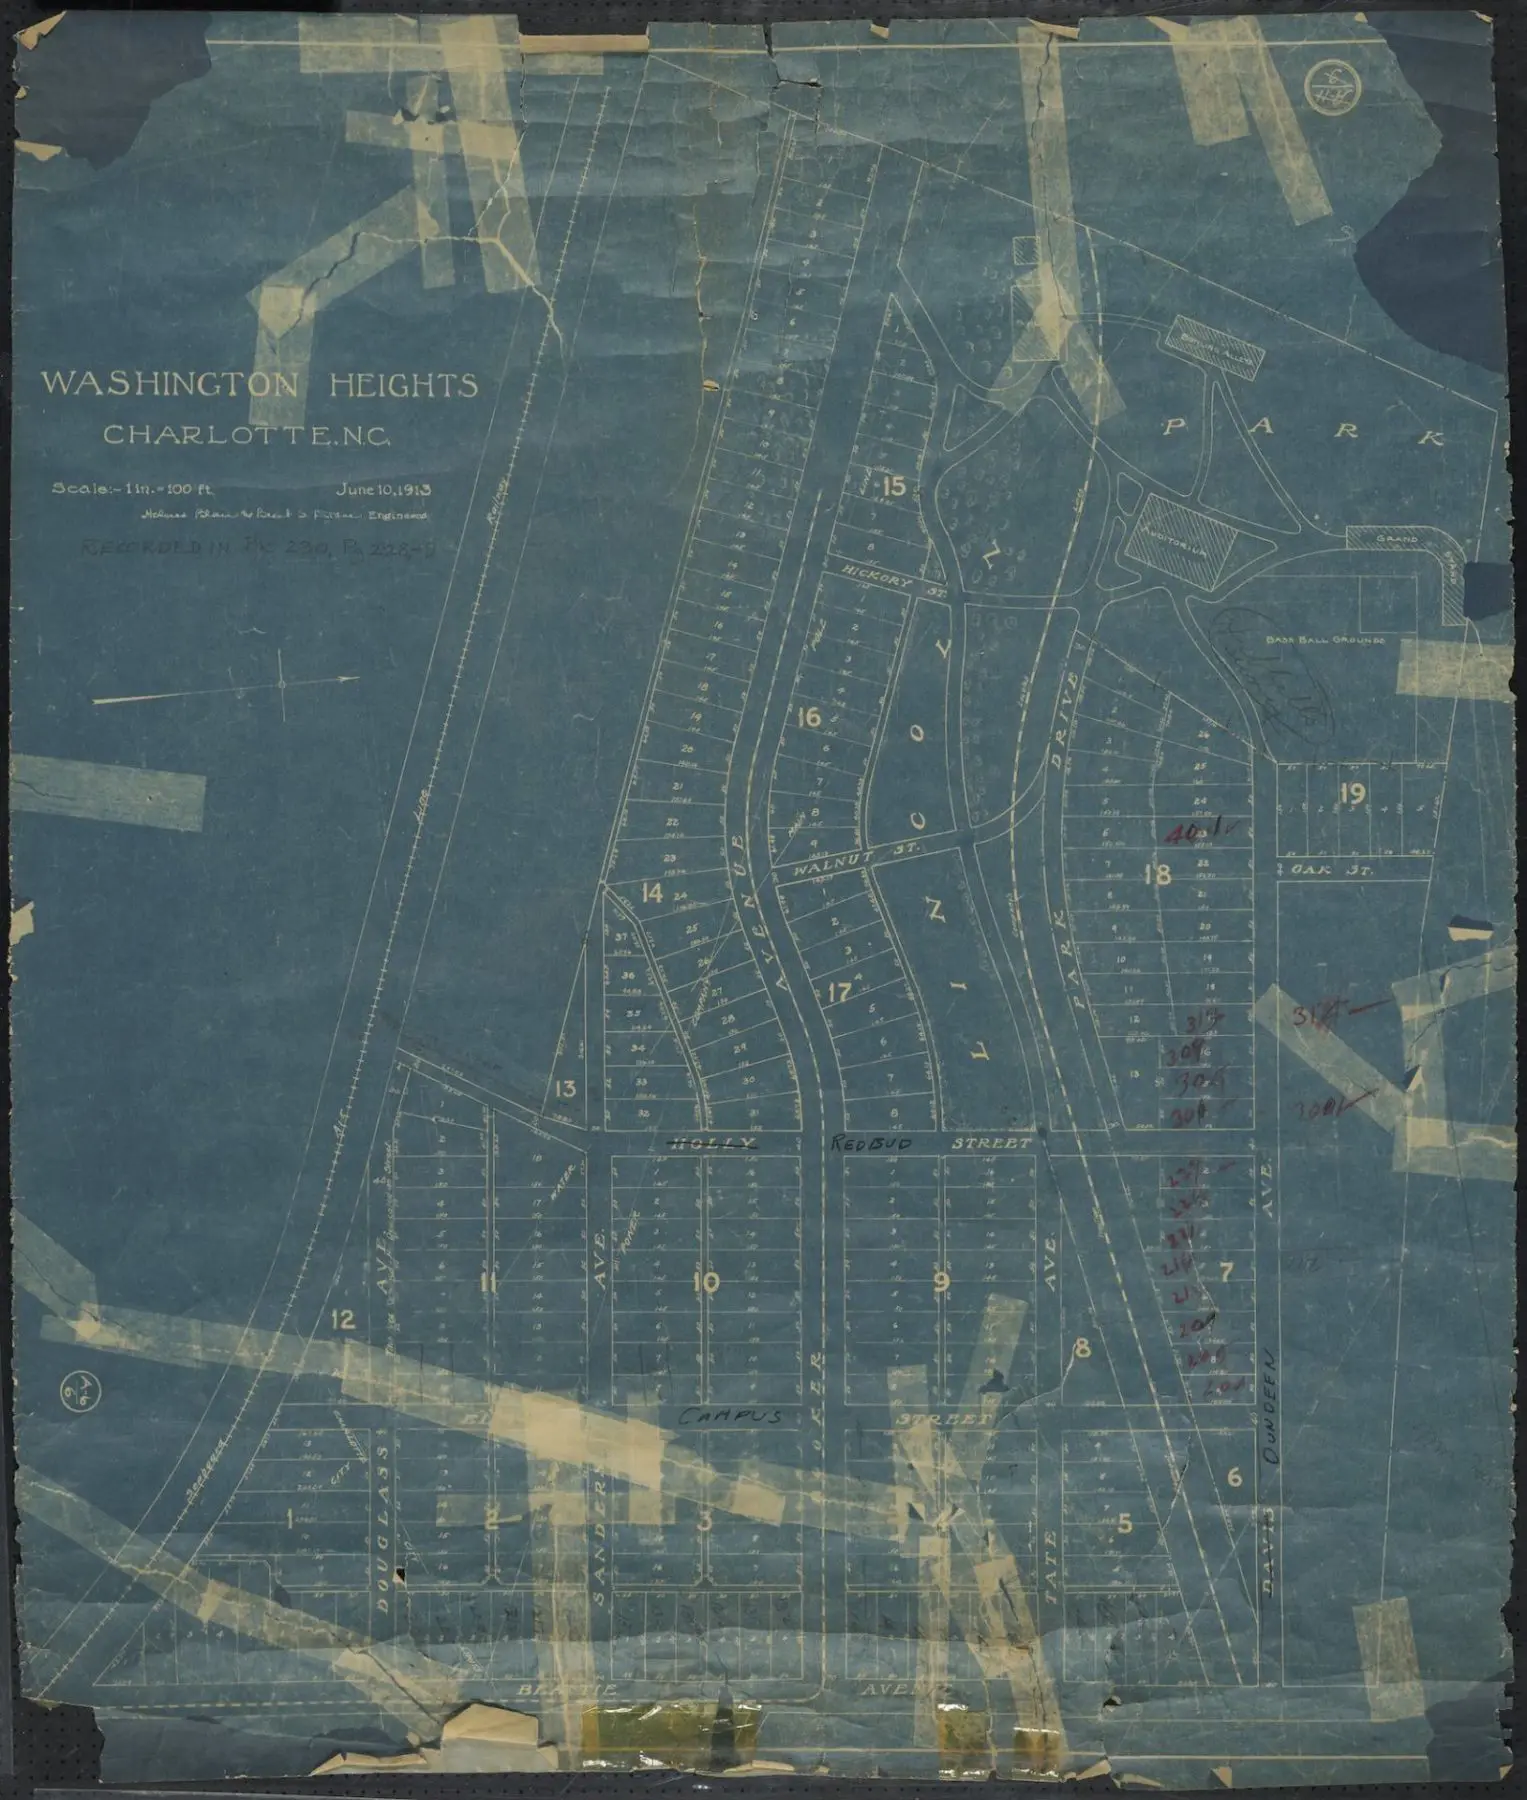 A map on Charlotte's Washington Heights neighborhood in 1913.